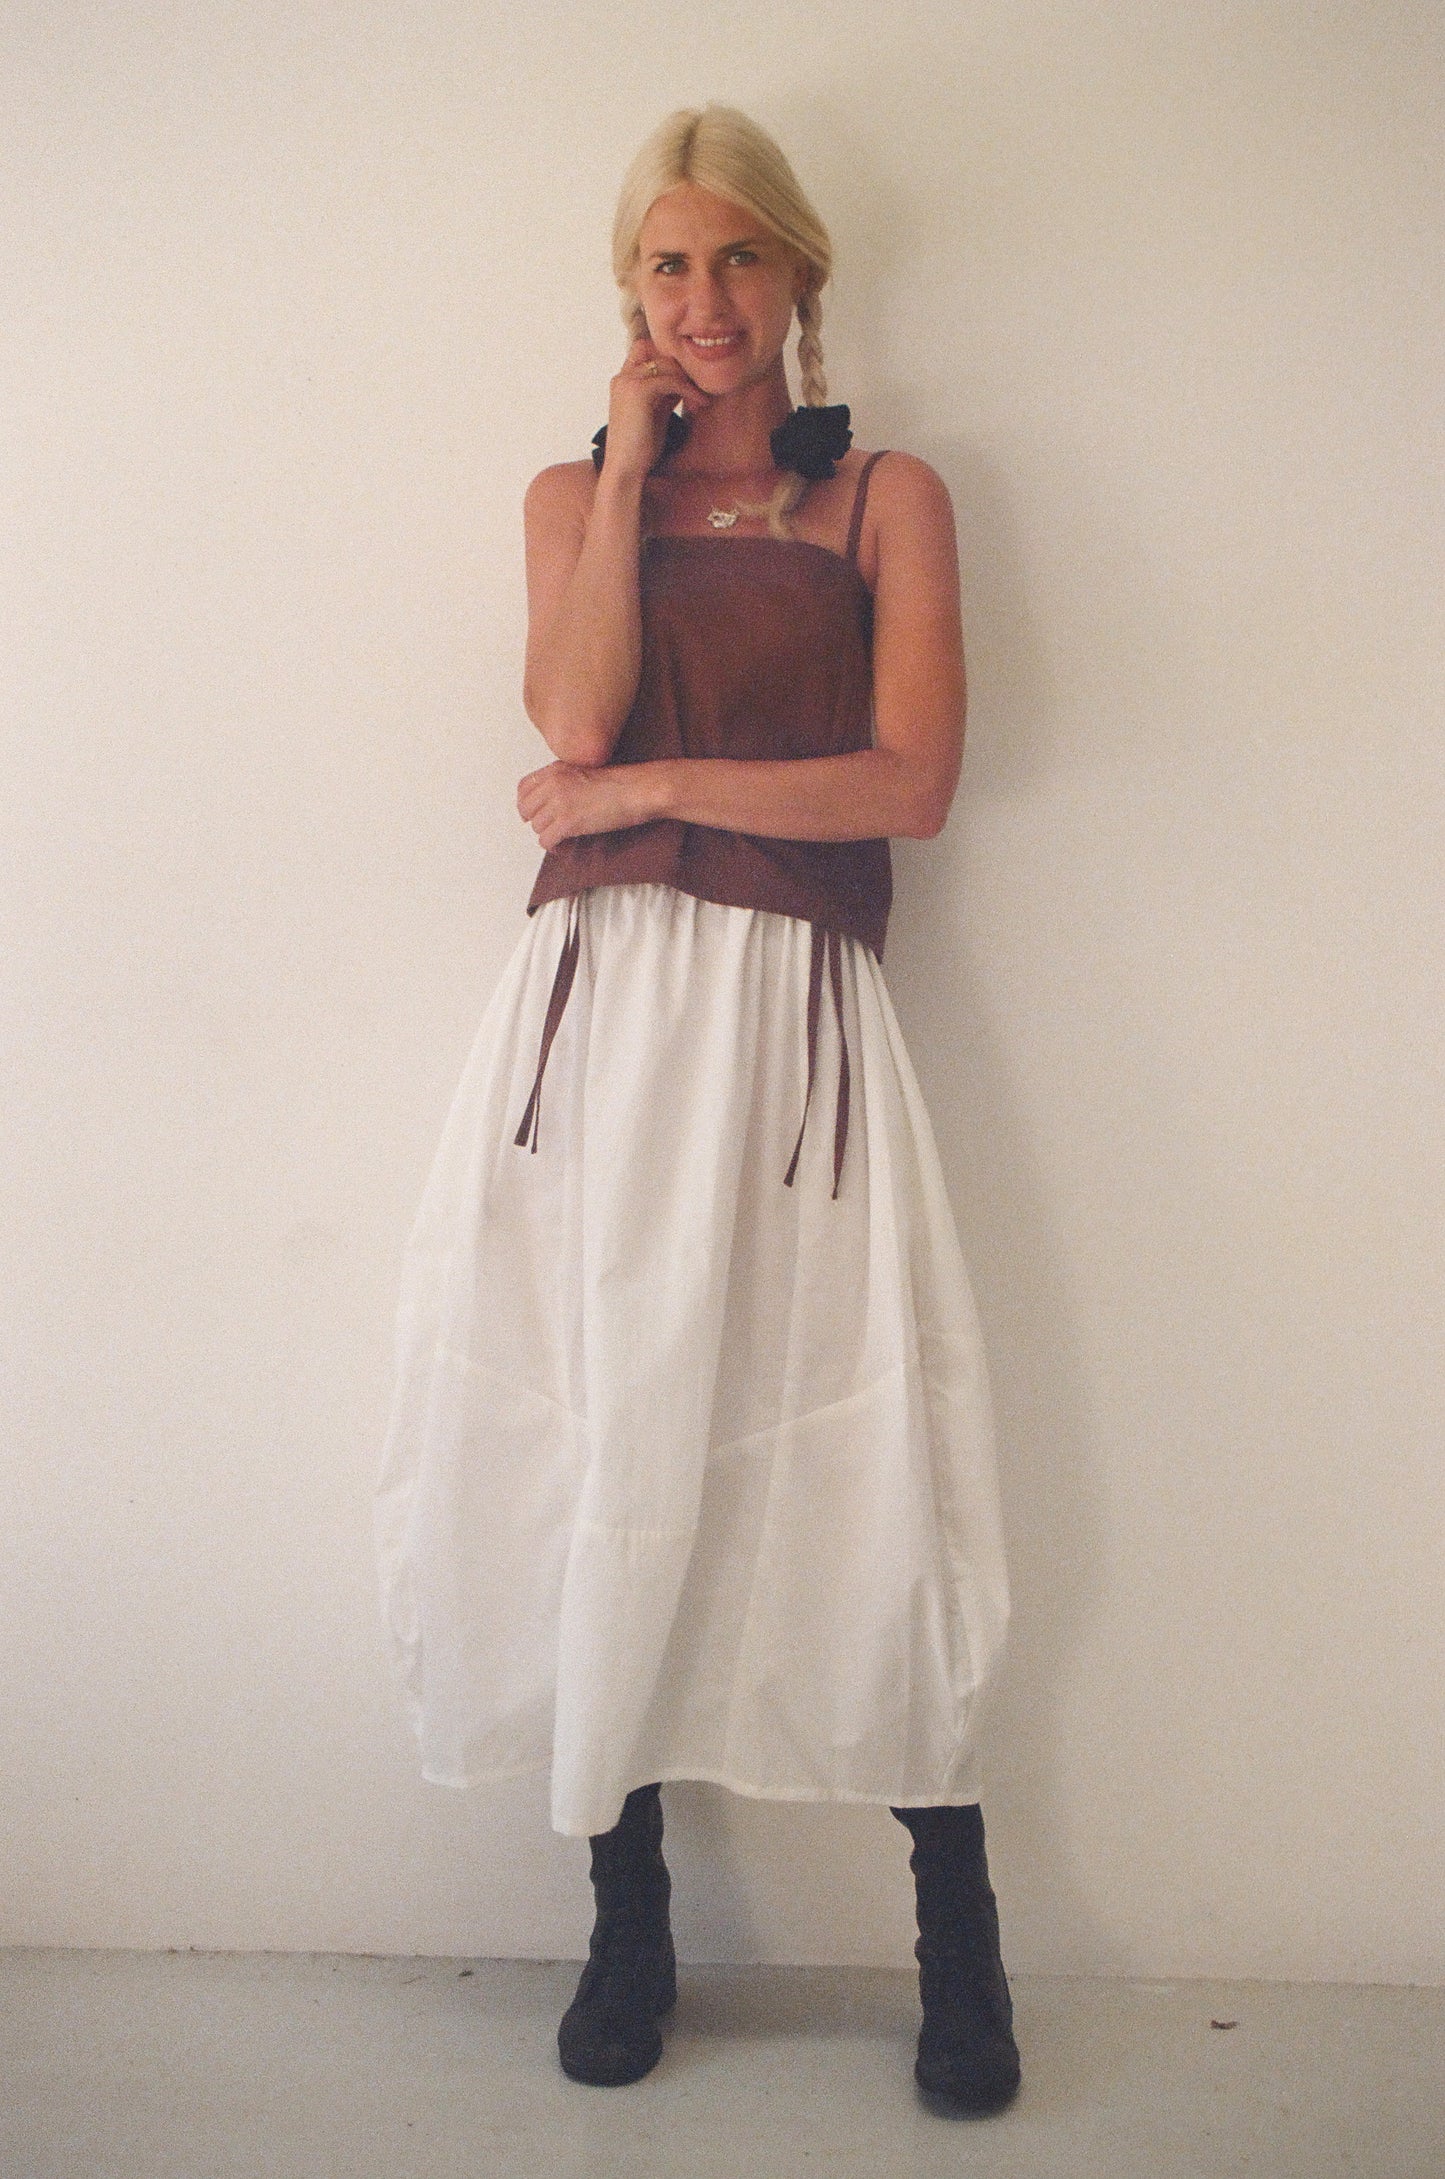 Mimi Holvast - Midi skirt handmade in white organic cotton, high waist cotton skirt white